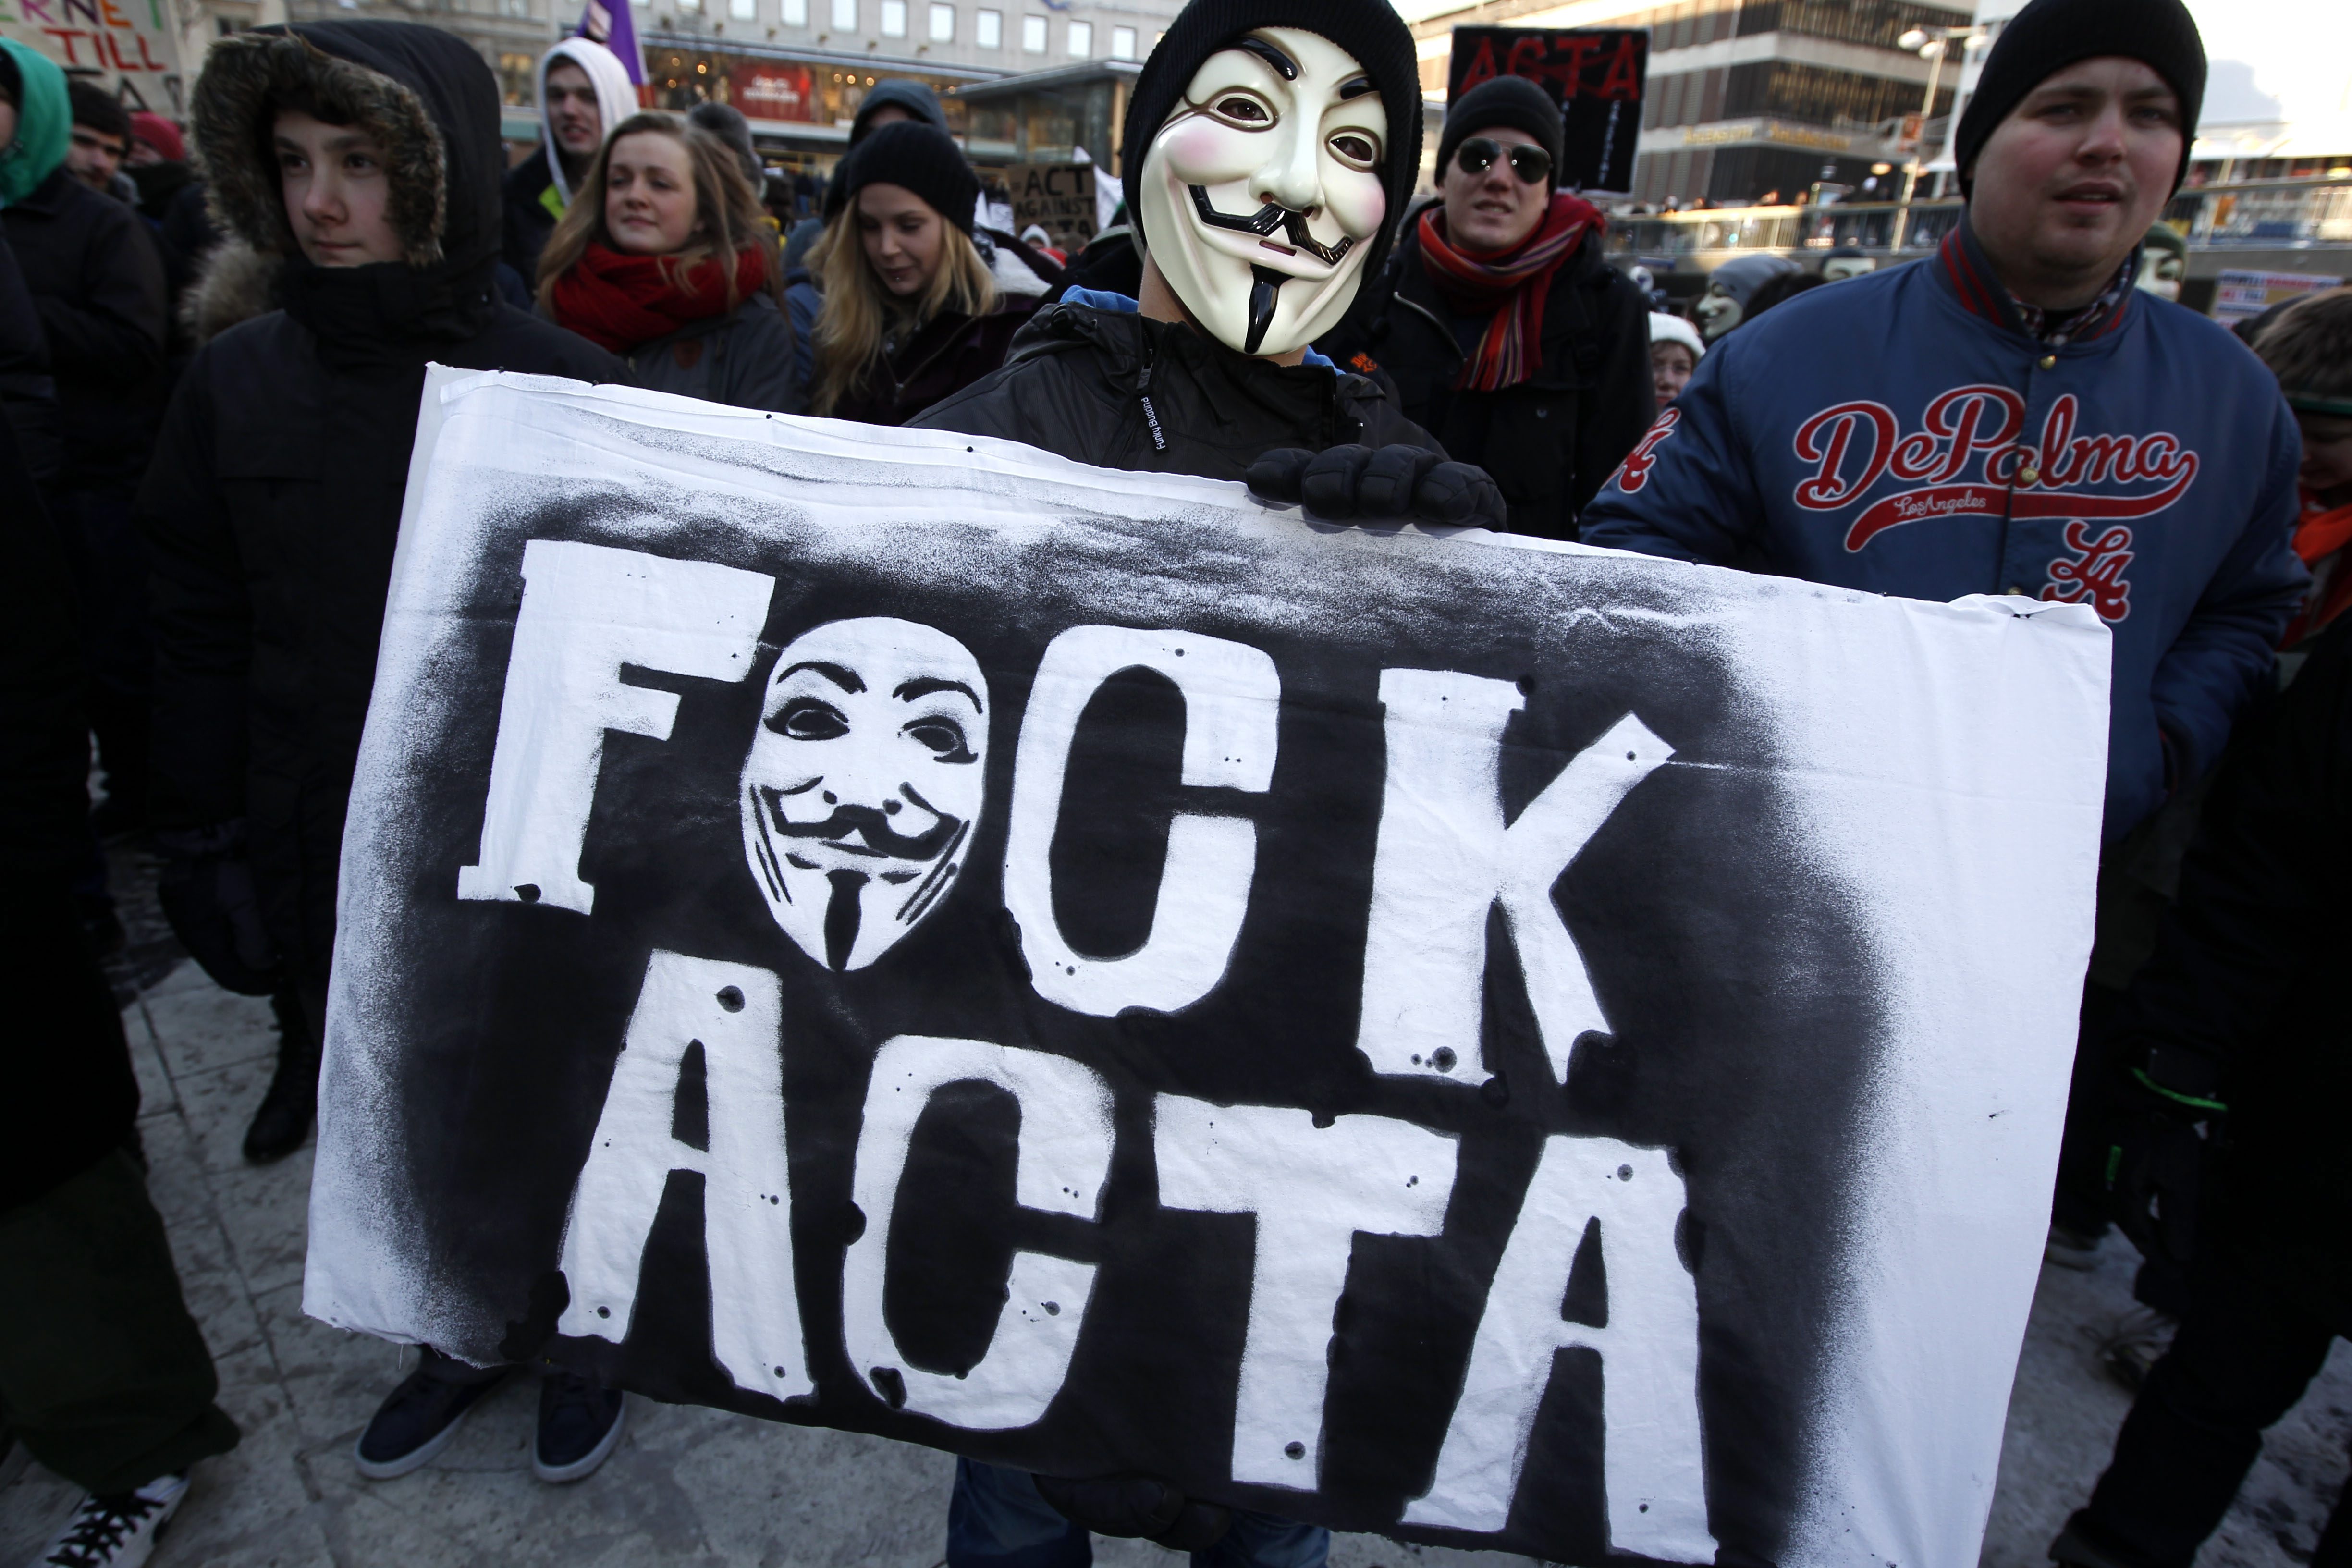 Acta, Politik, Integritet, Piratpartiet, Internet, EU, Fildelning